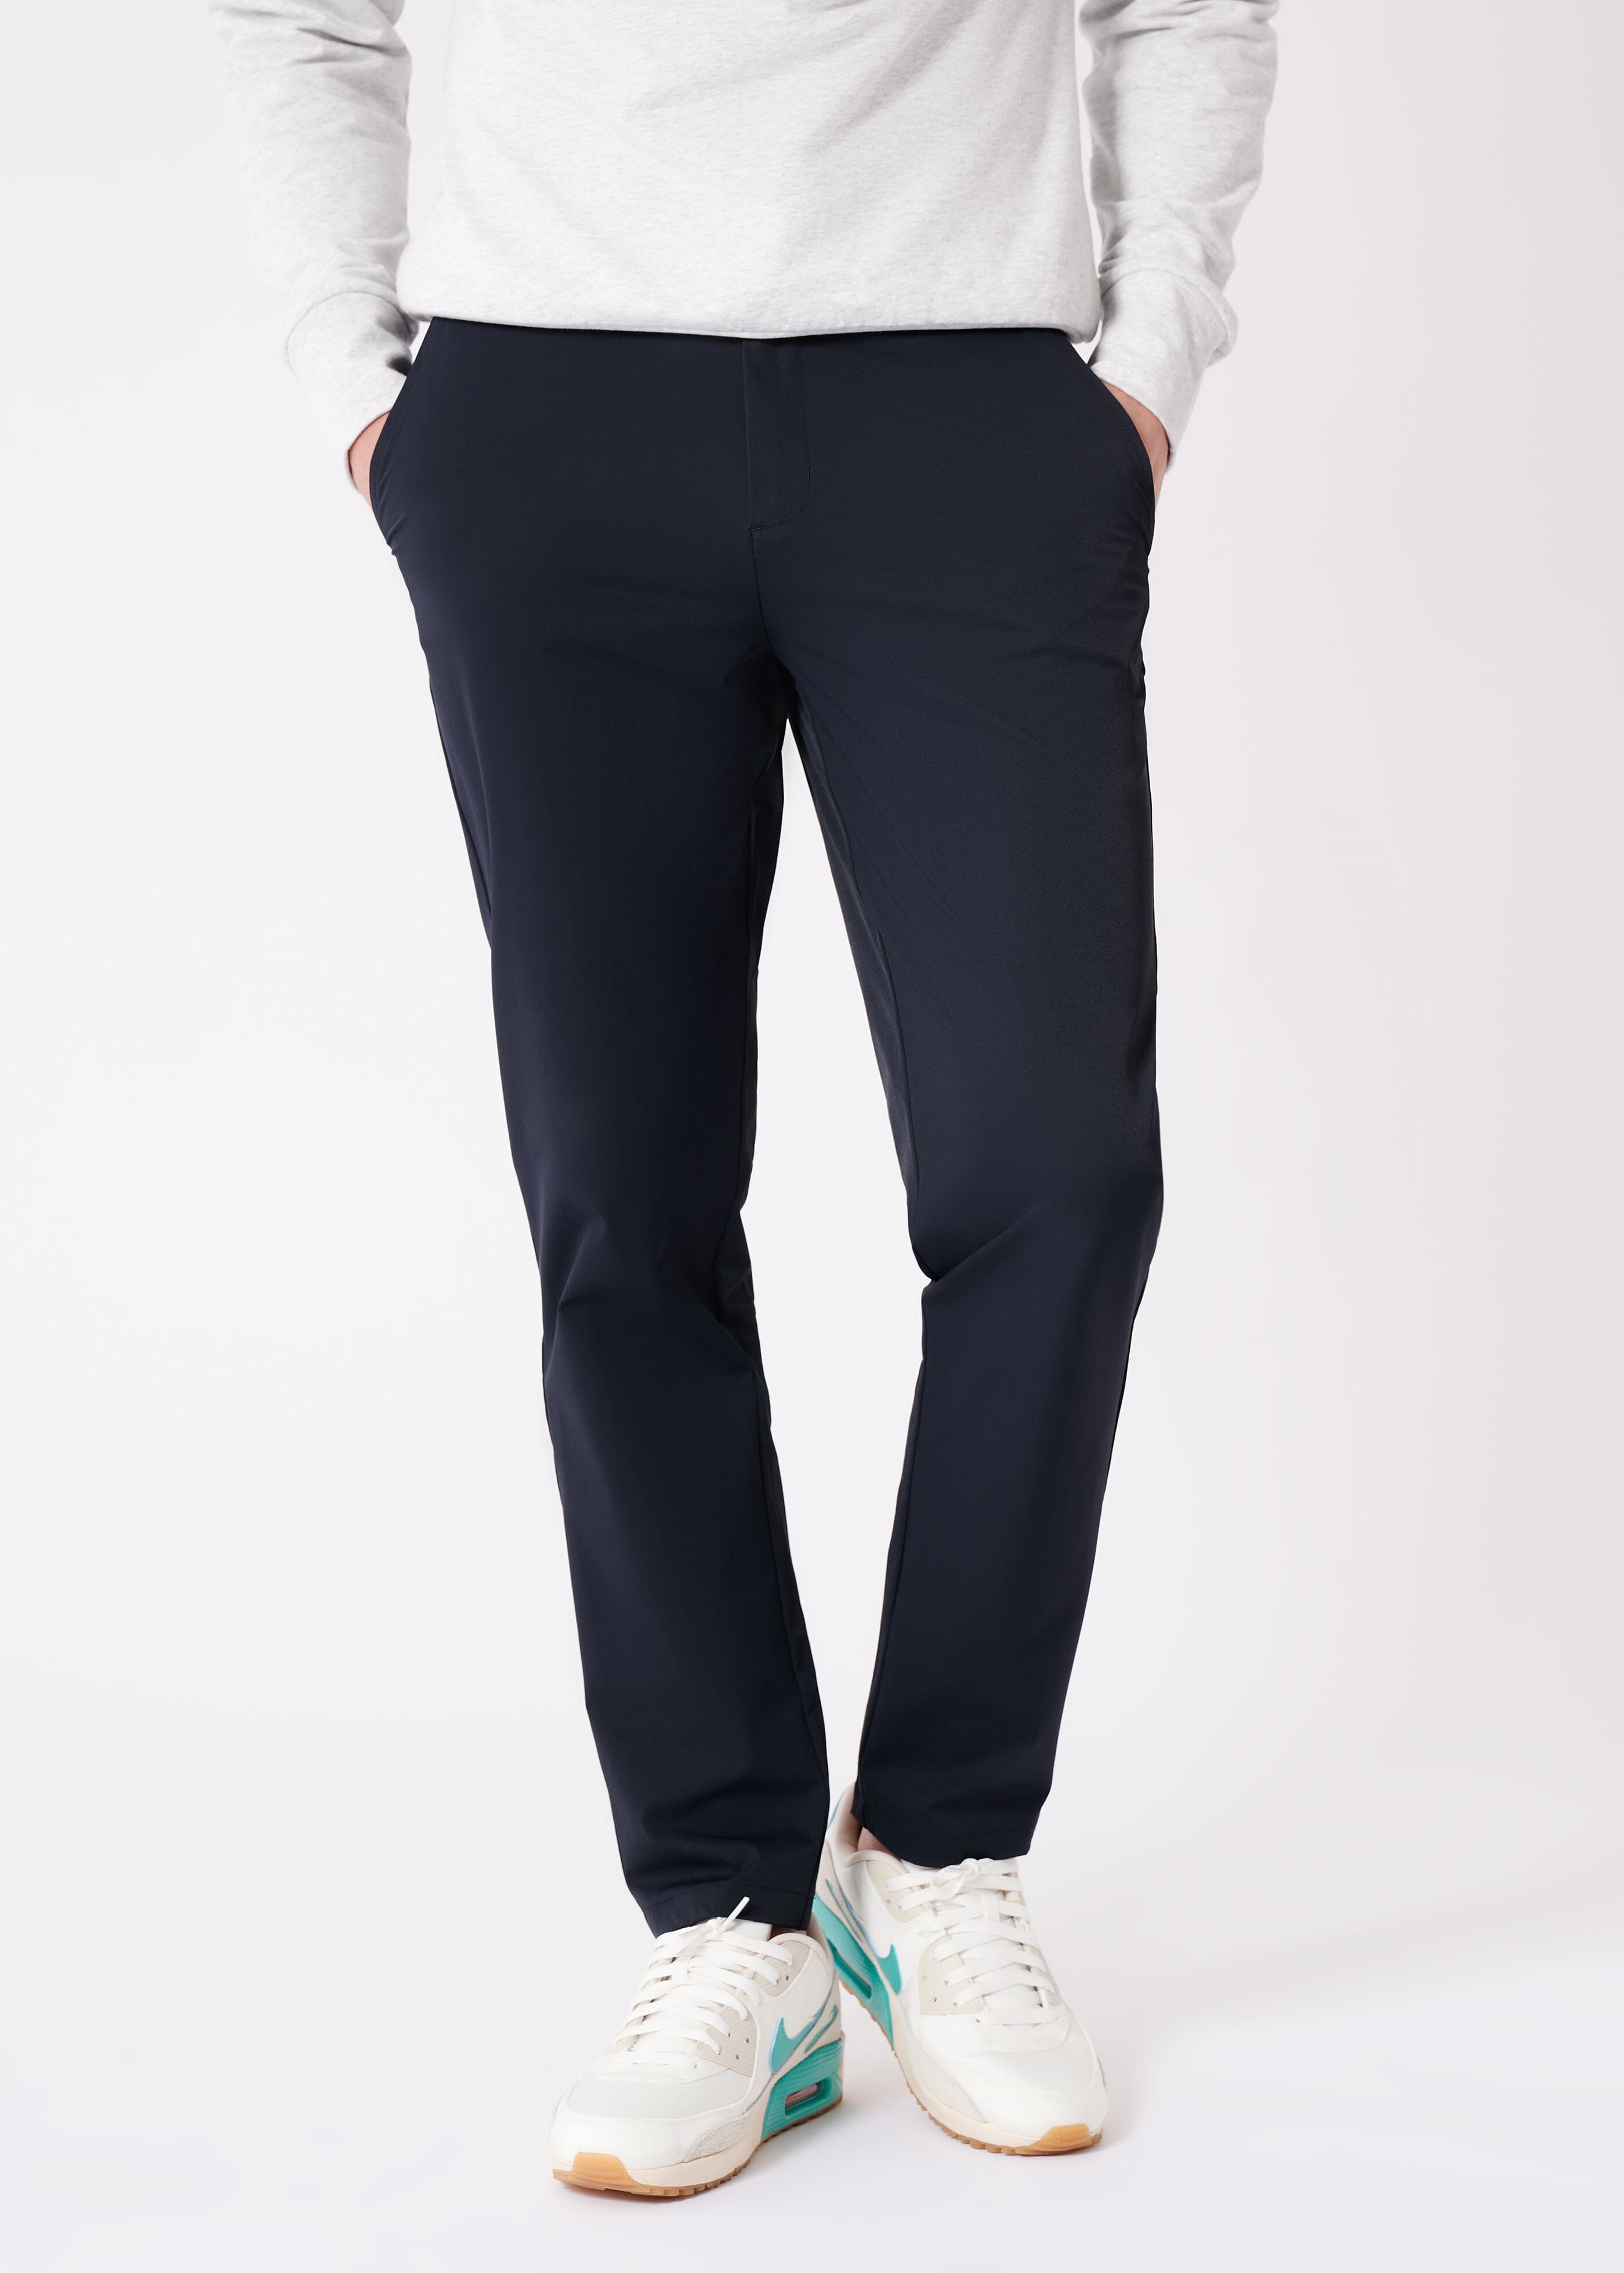 Black Stretch Tech Pants, Virtus Pant | Swet Tailor®